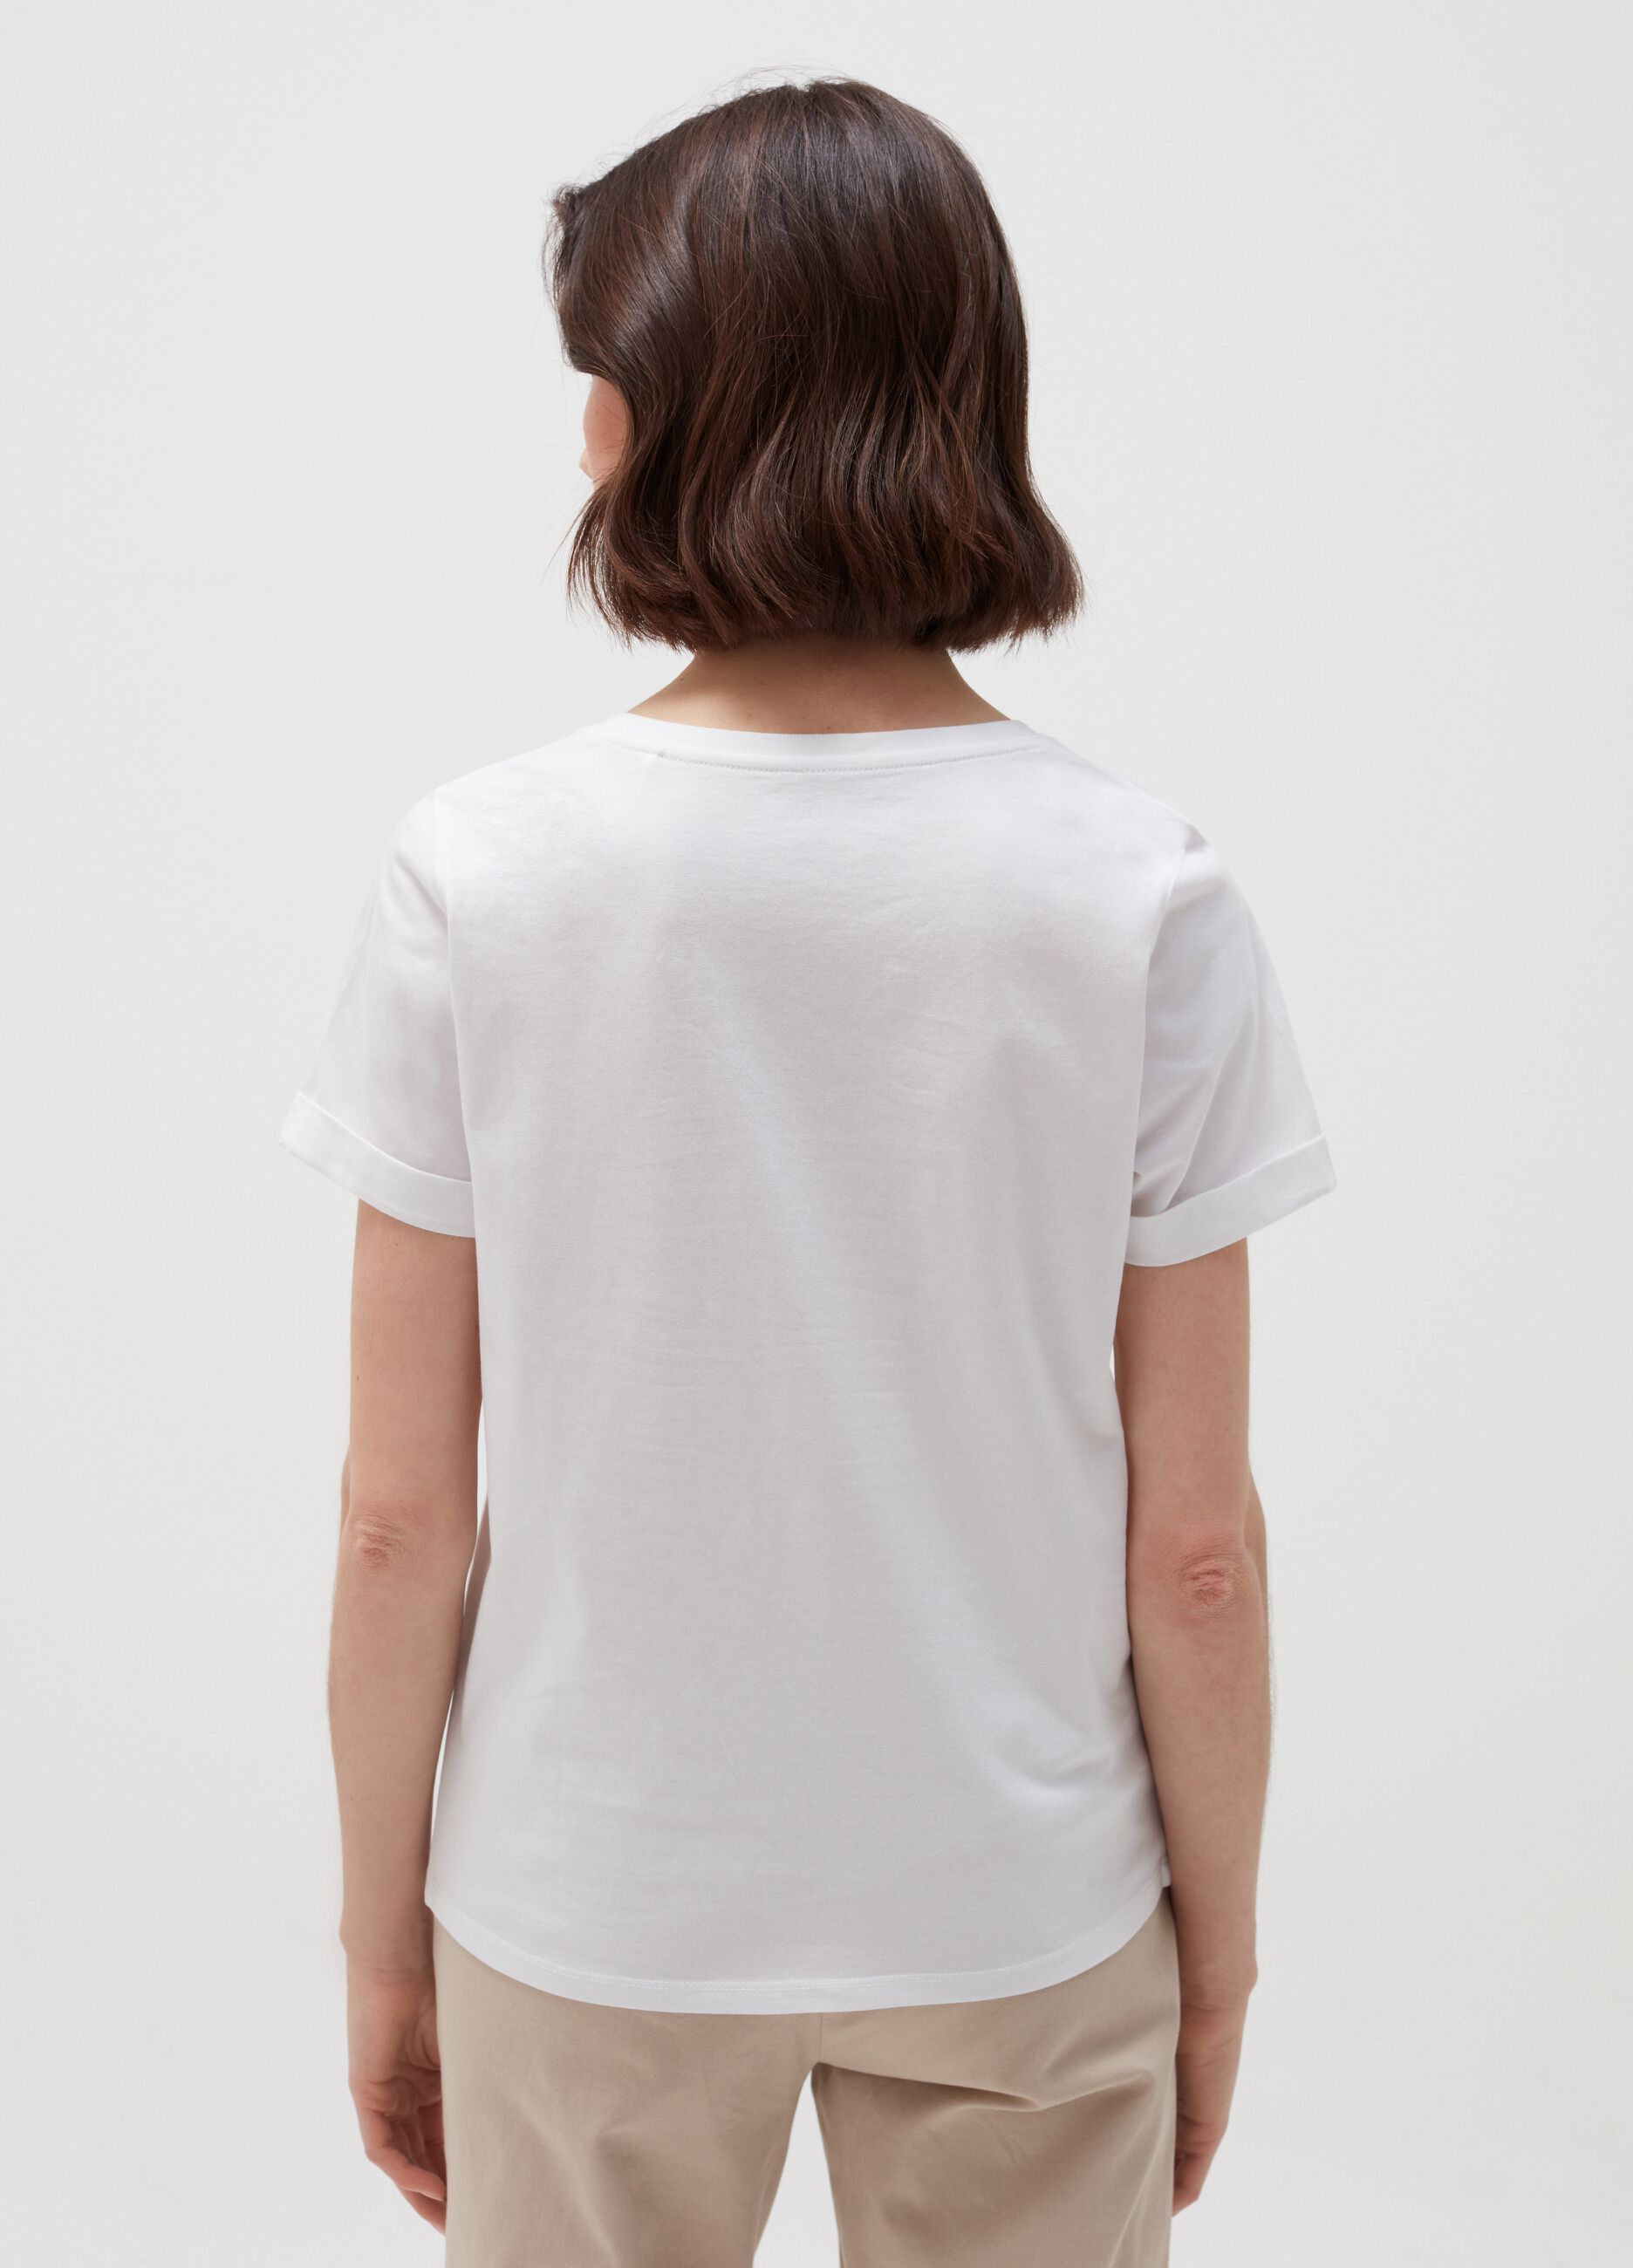 Supima cotton T-shirt with V neck